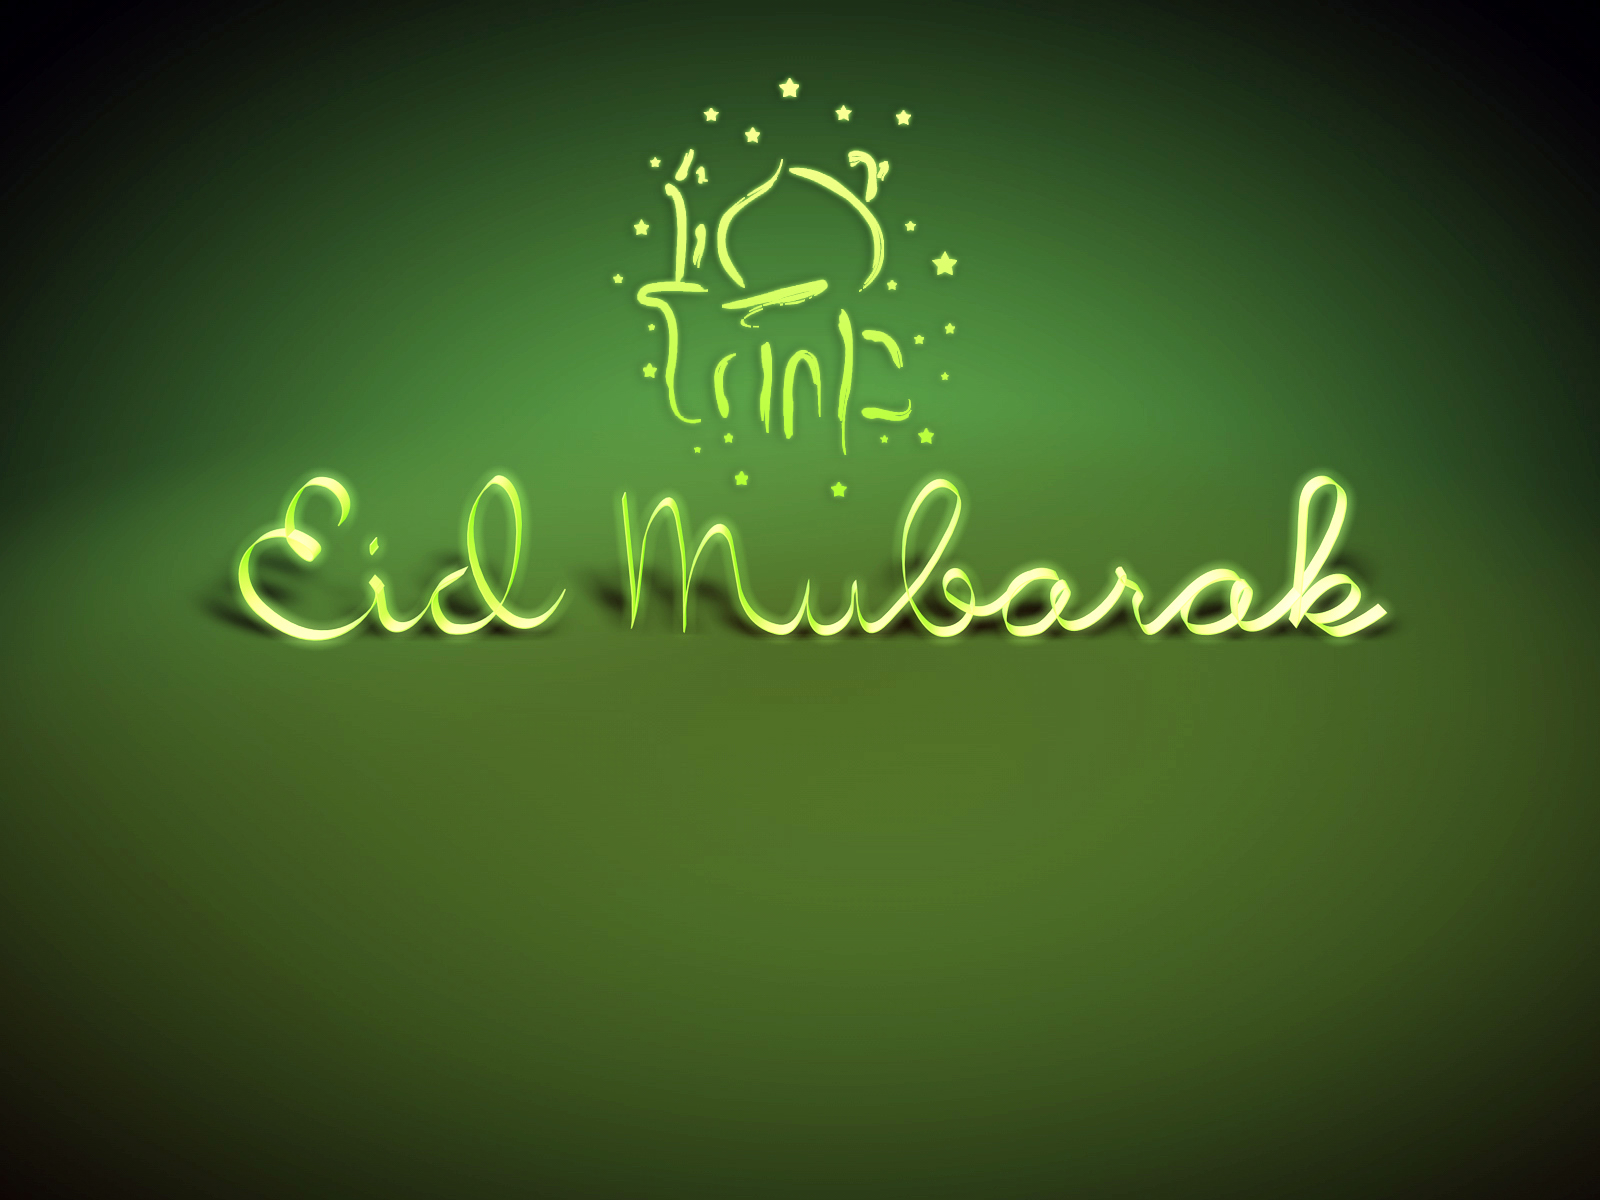 Eid Mubarak 2018